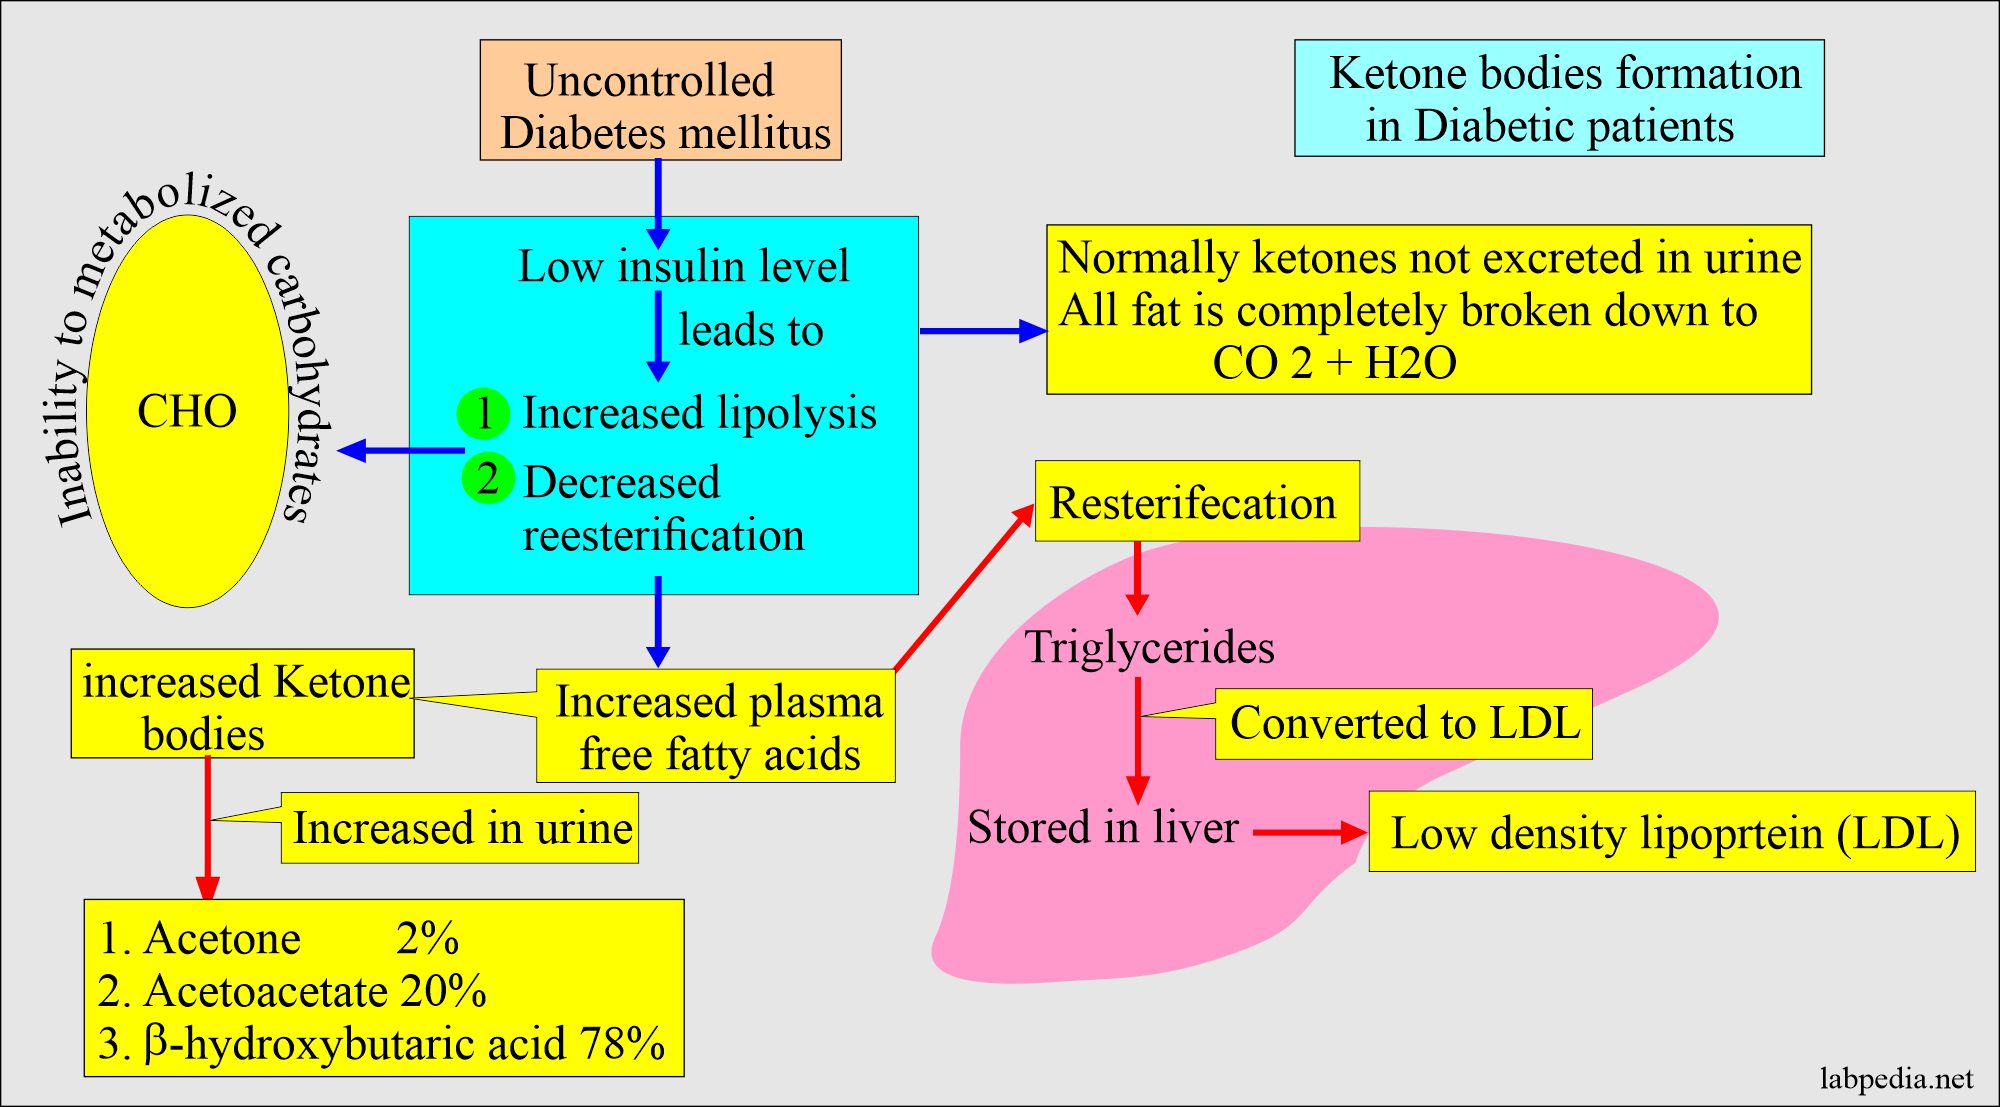 Ketone bodies formation in diabetic patients